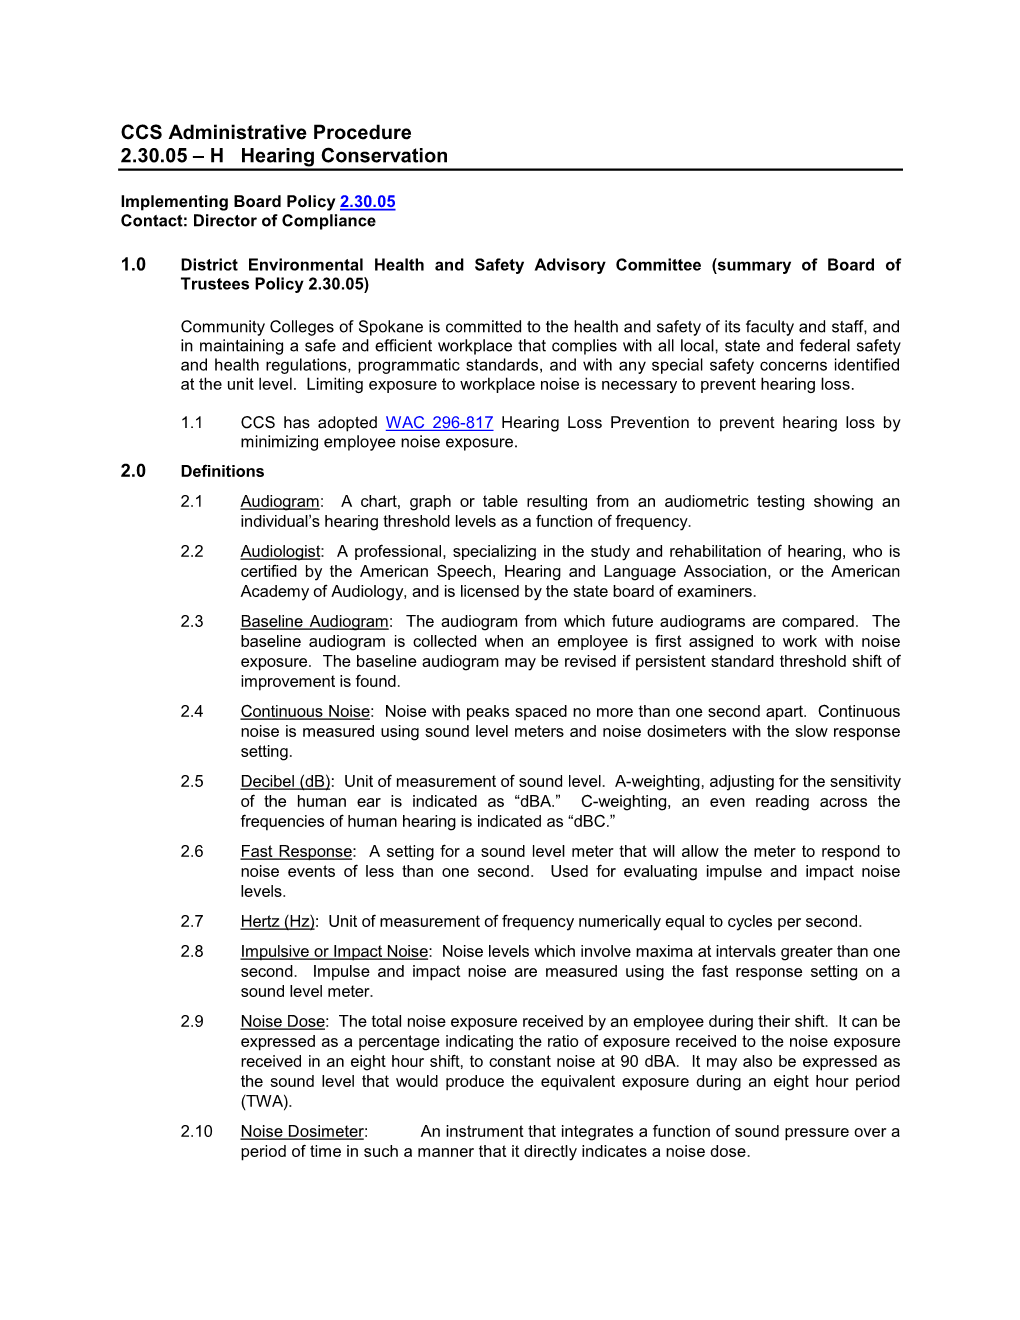 CCS Administrative Procedure 2.30.05 – H Hearing Conservation